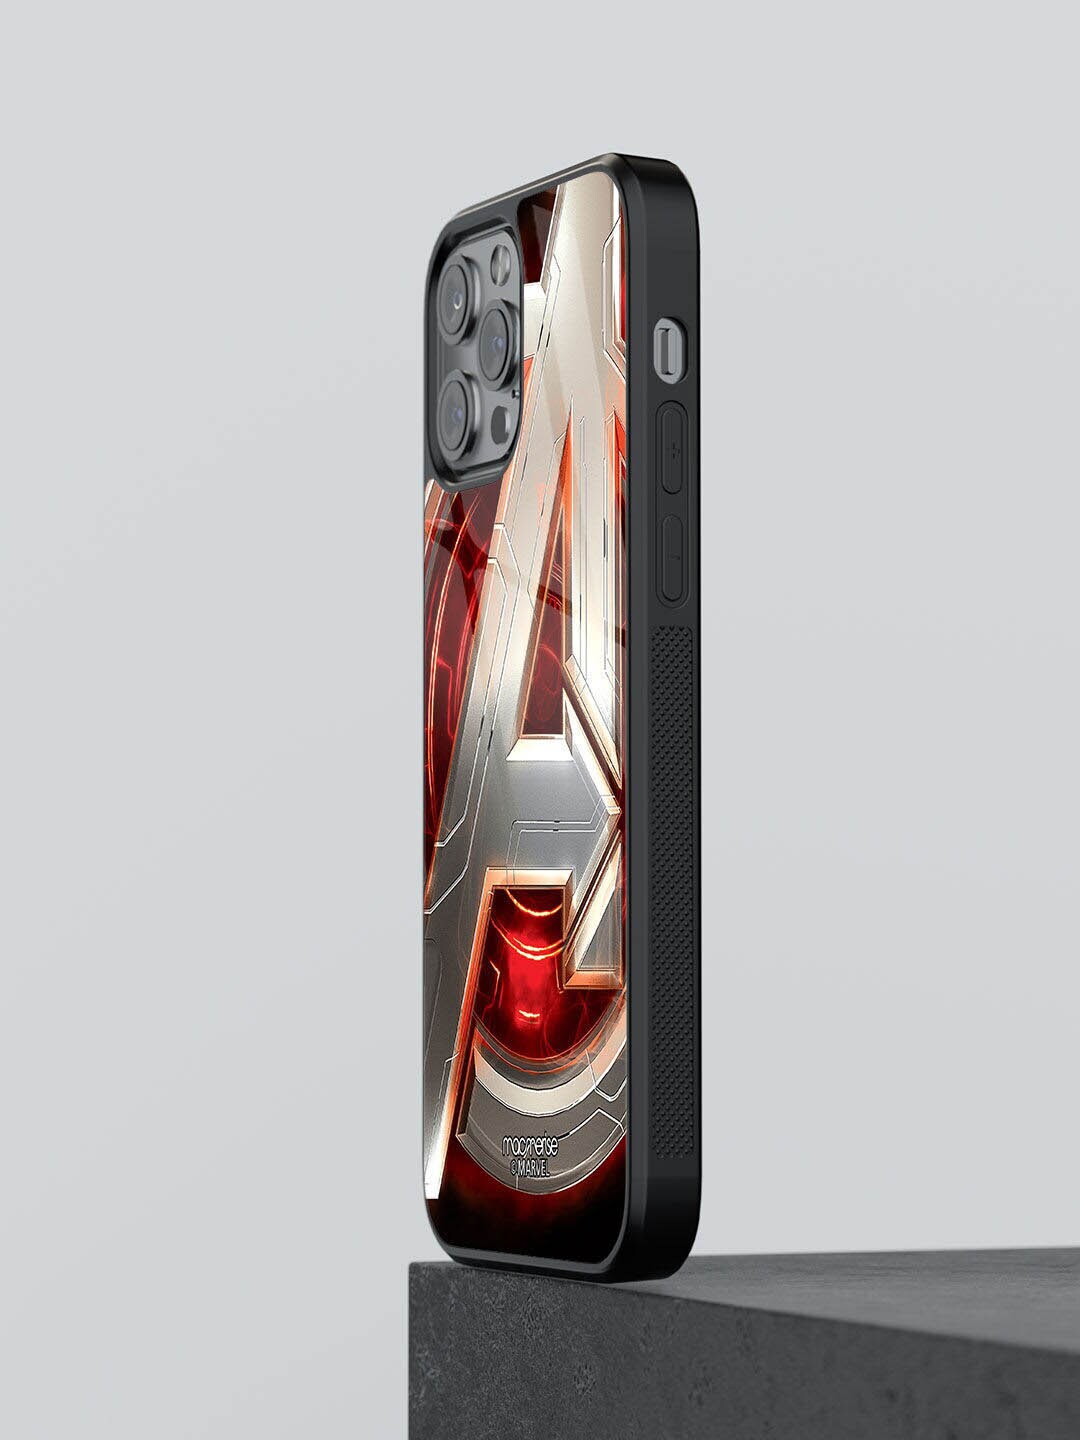 macmerise Grey Printed Blah Blah iPhone 12 Pro Max Back Case Price in India